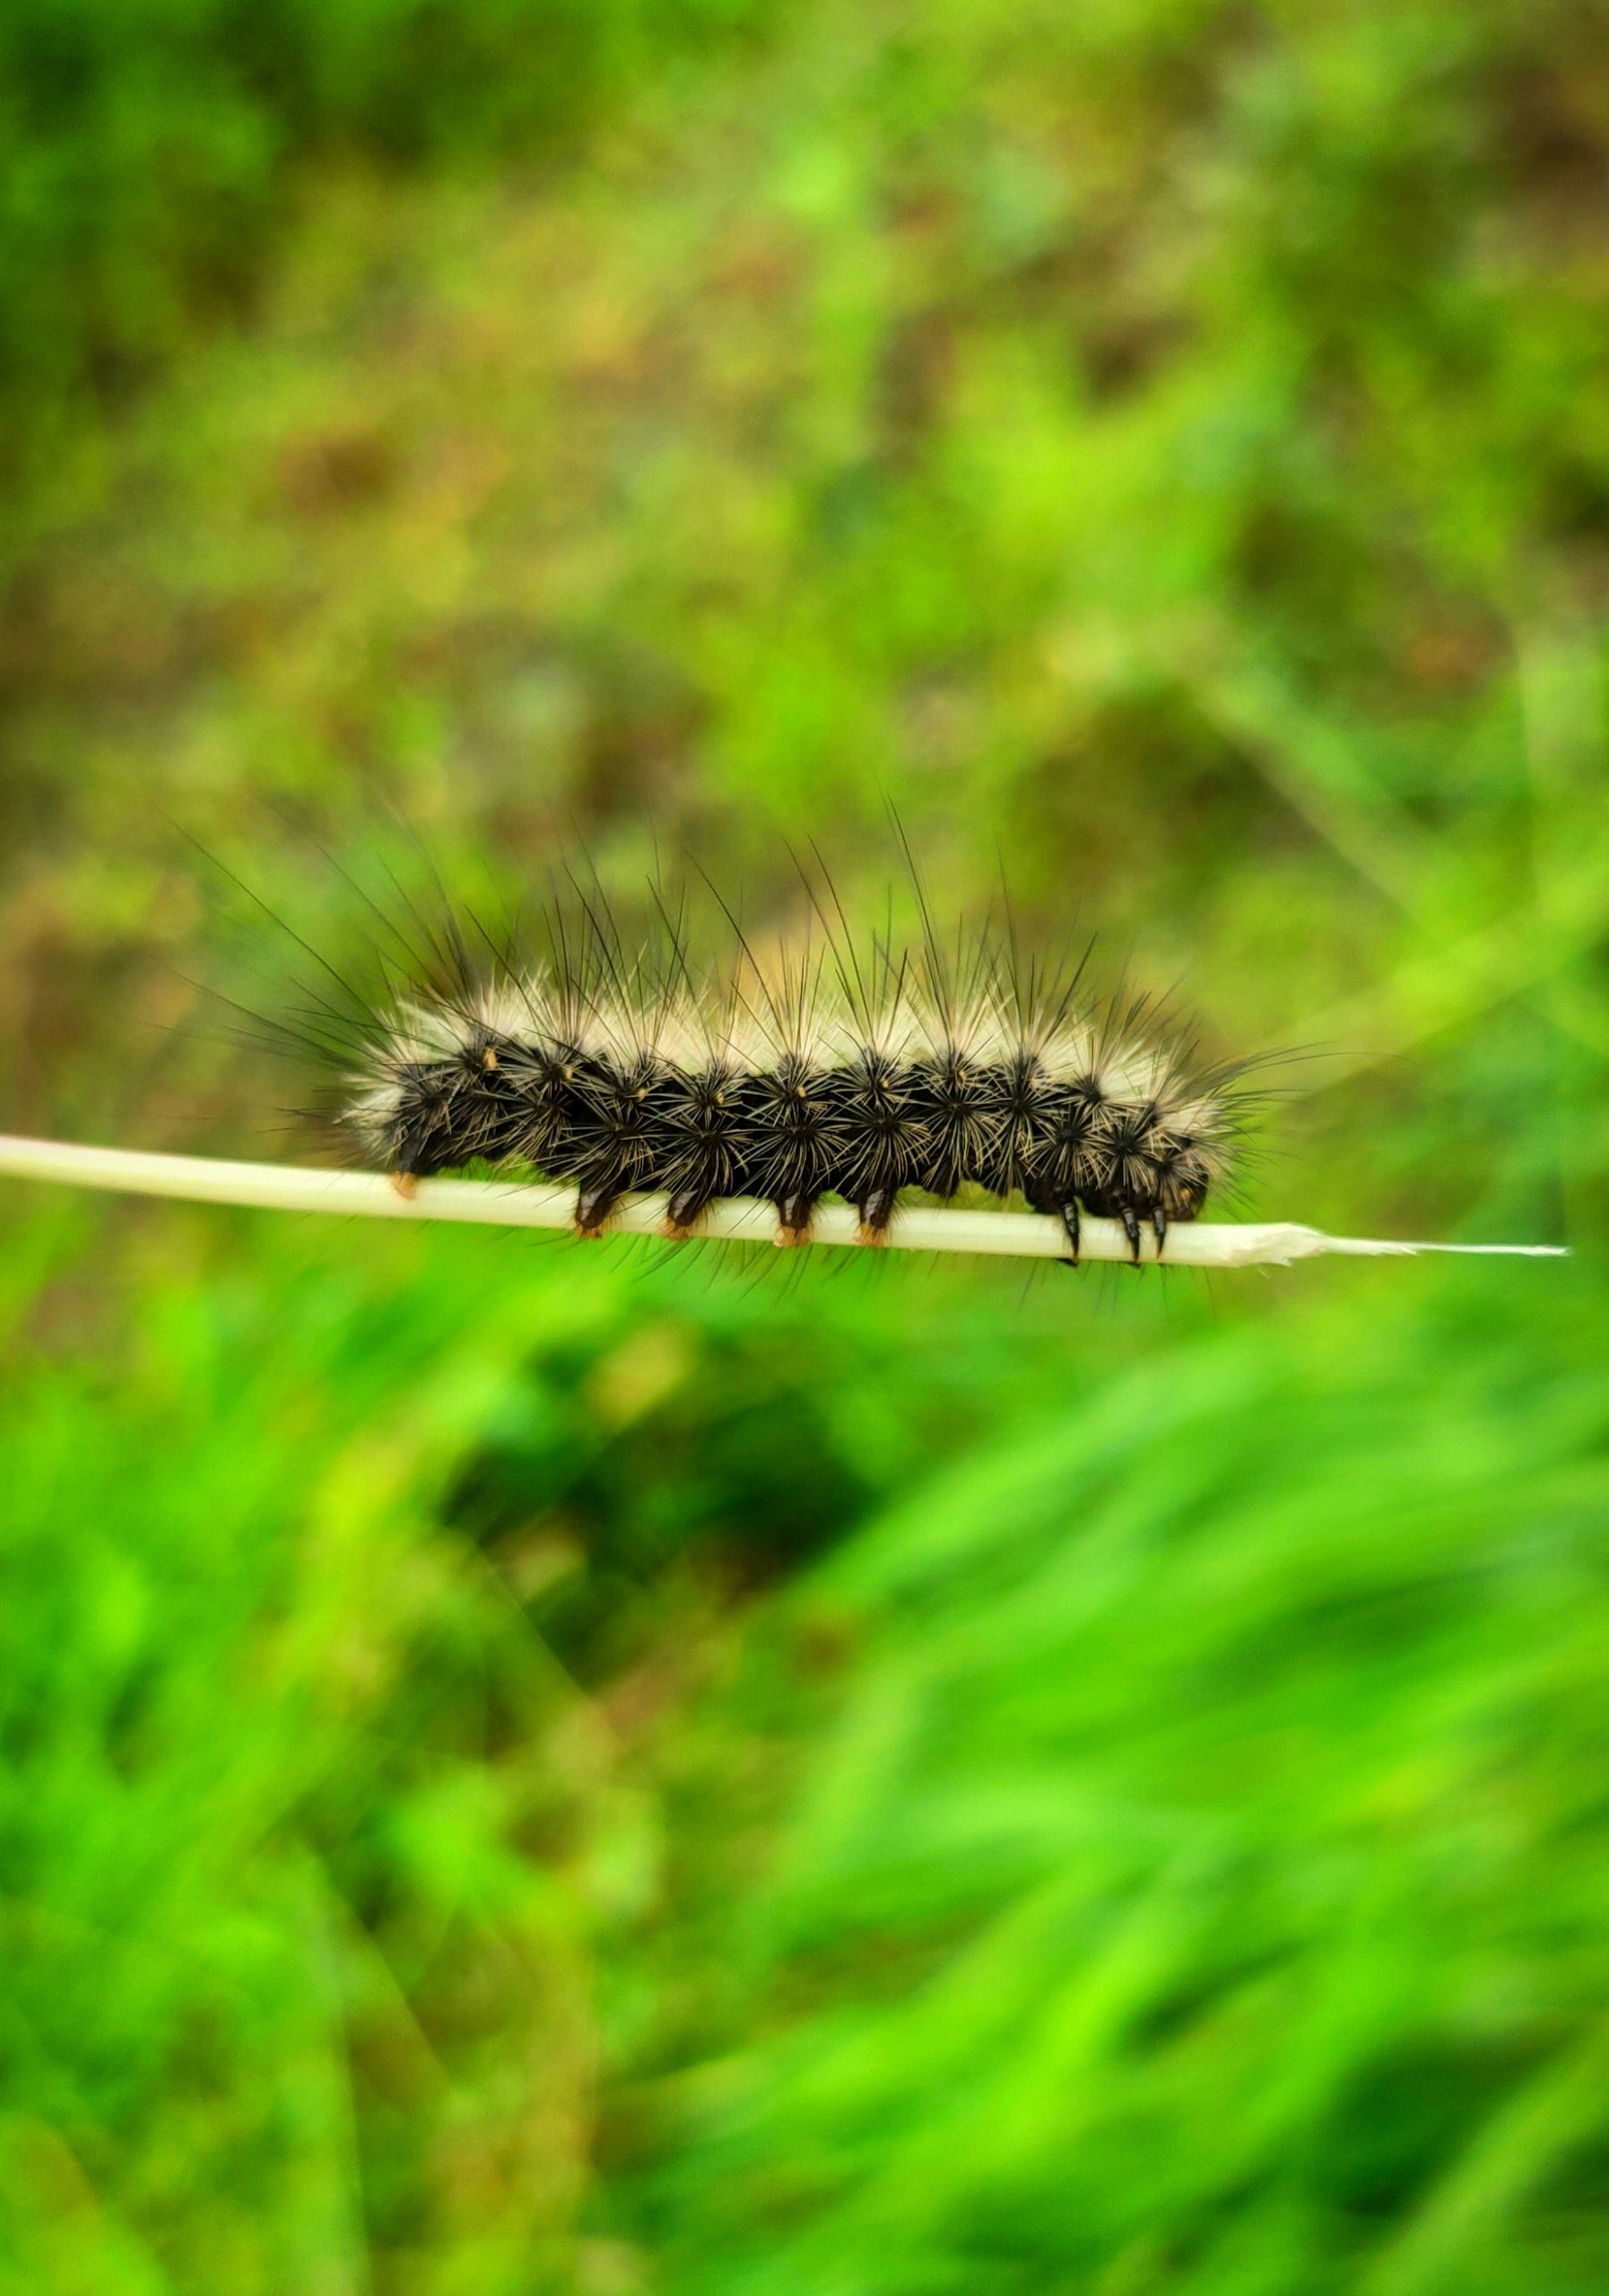 A thorny caterpillar on a twig